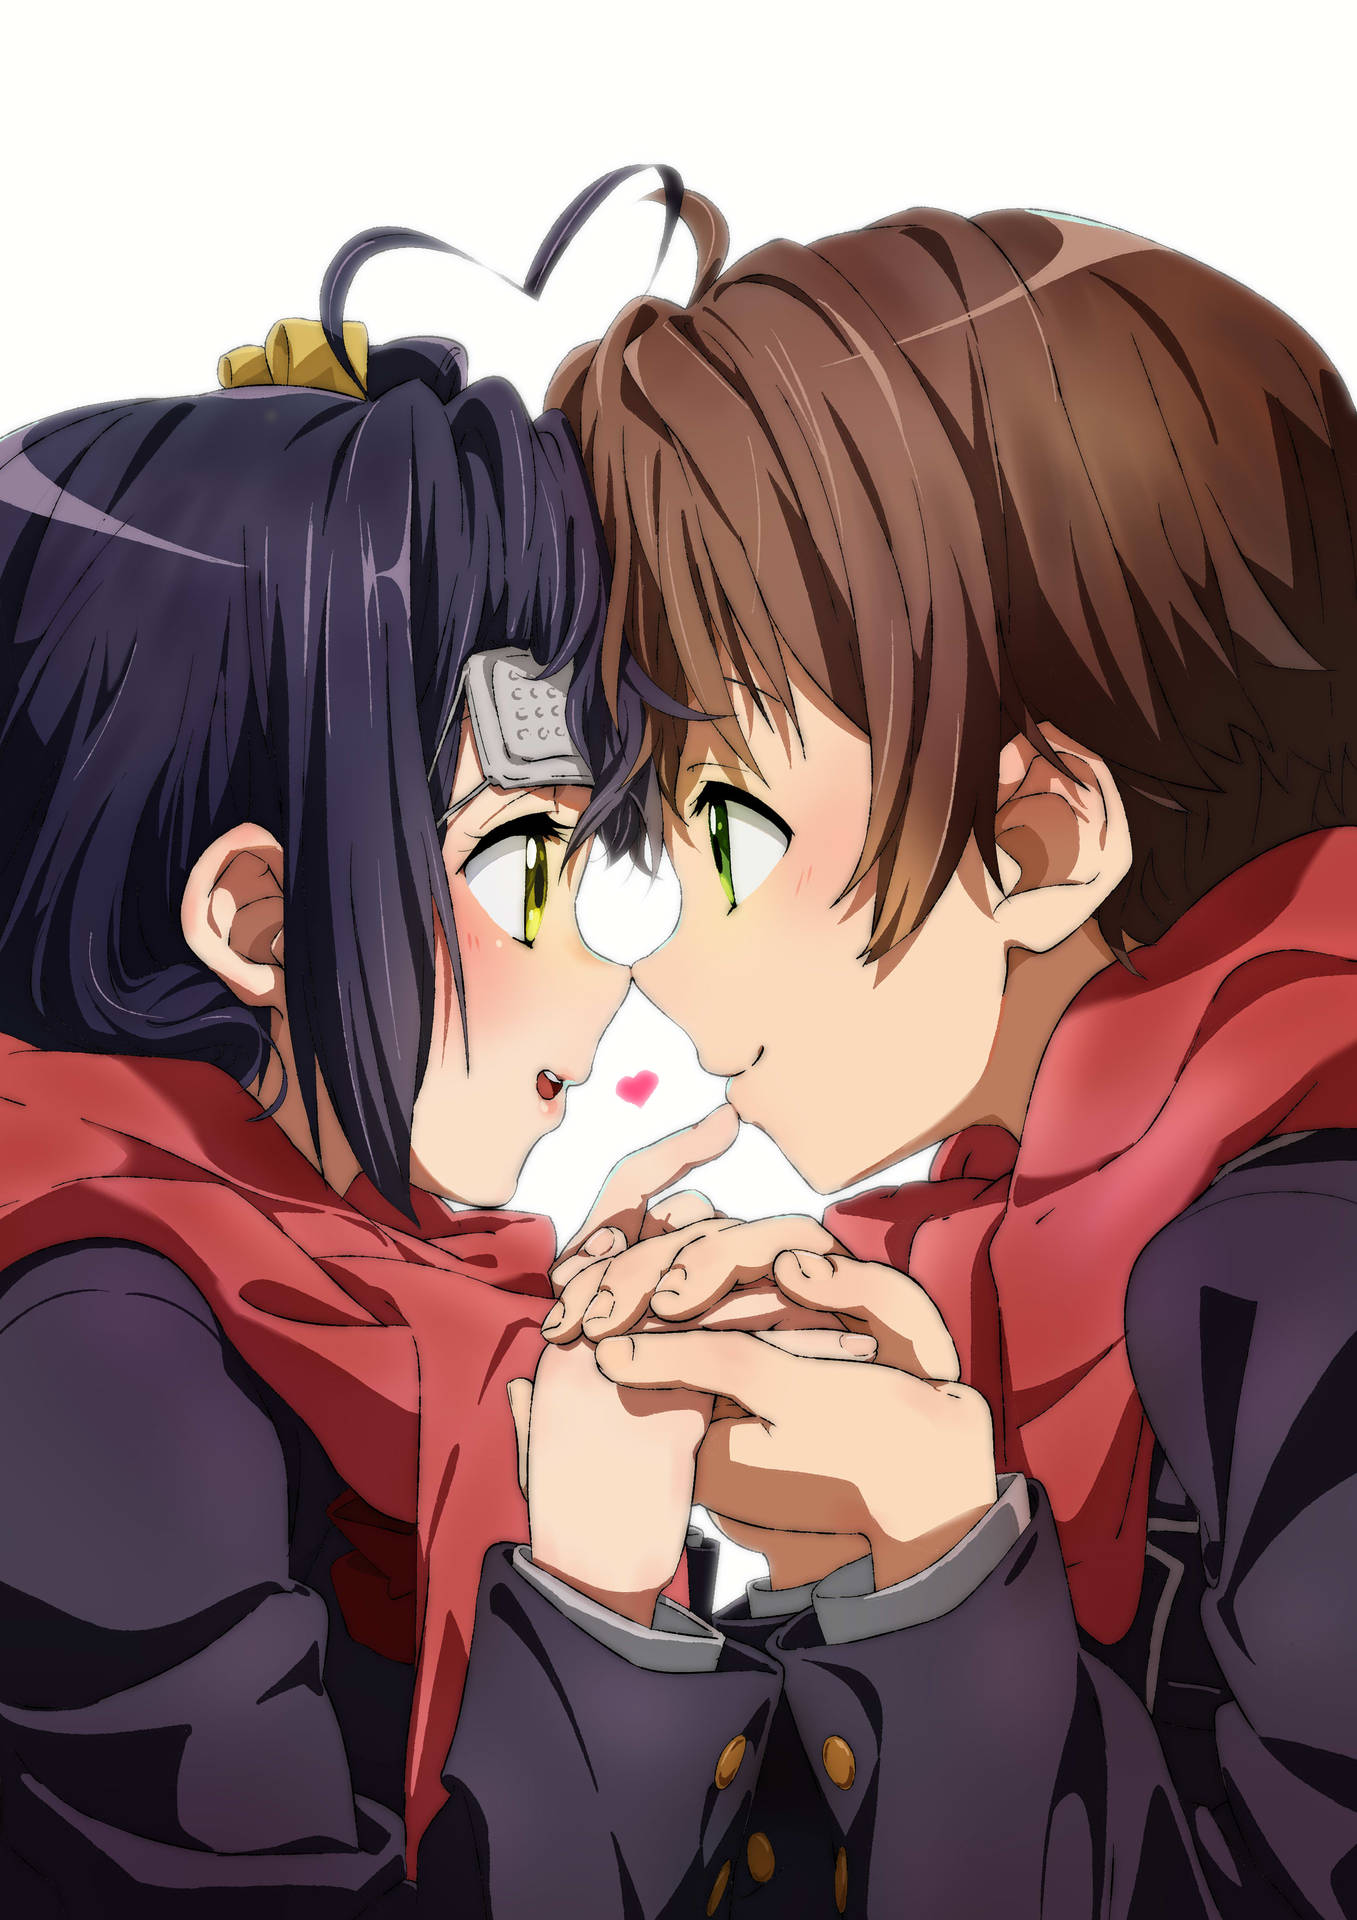 Anime Couple Chūnibyō Background